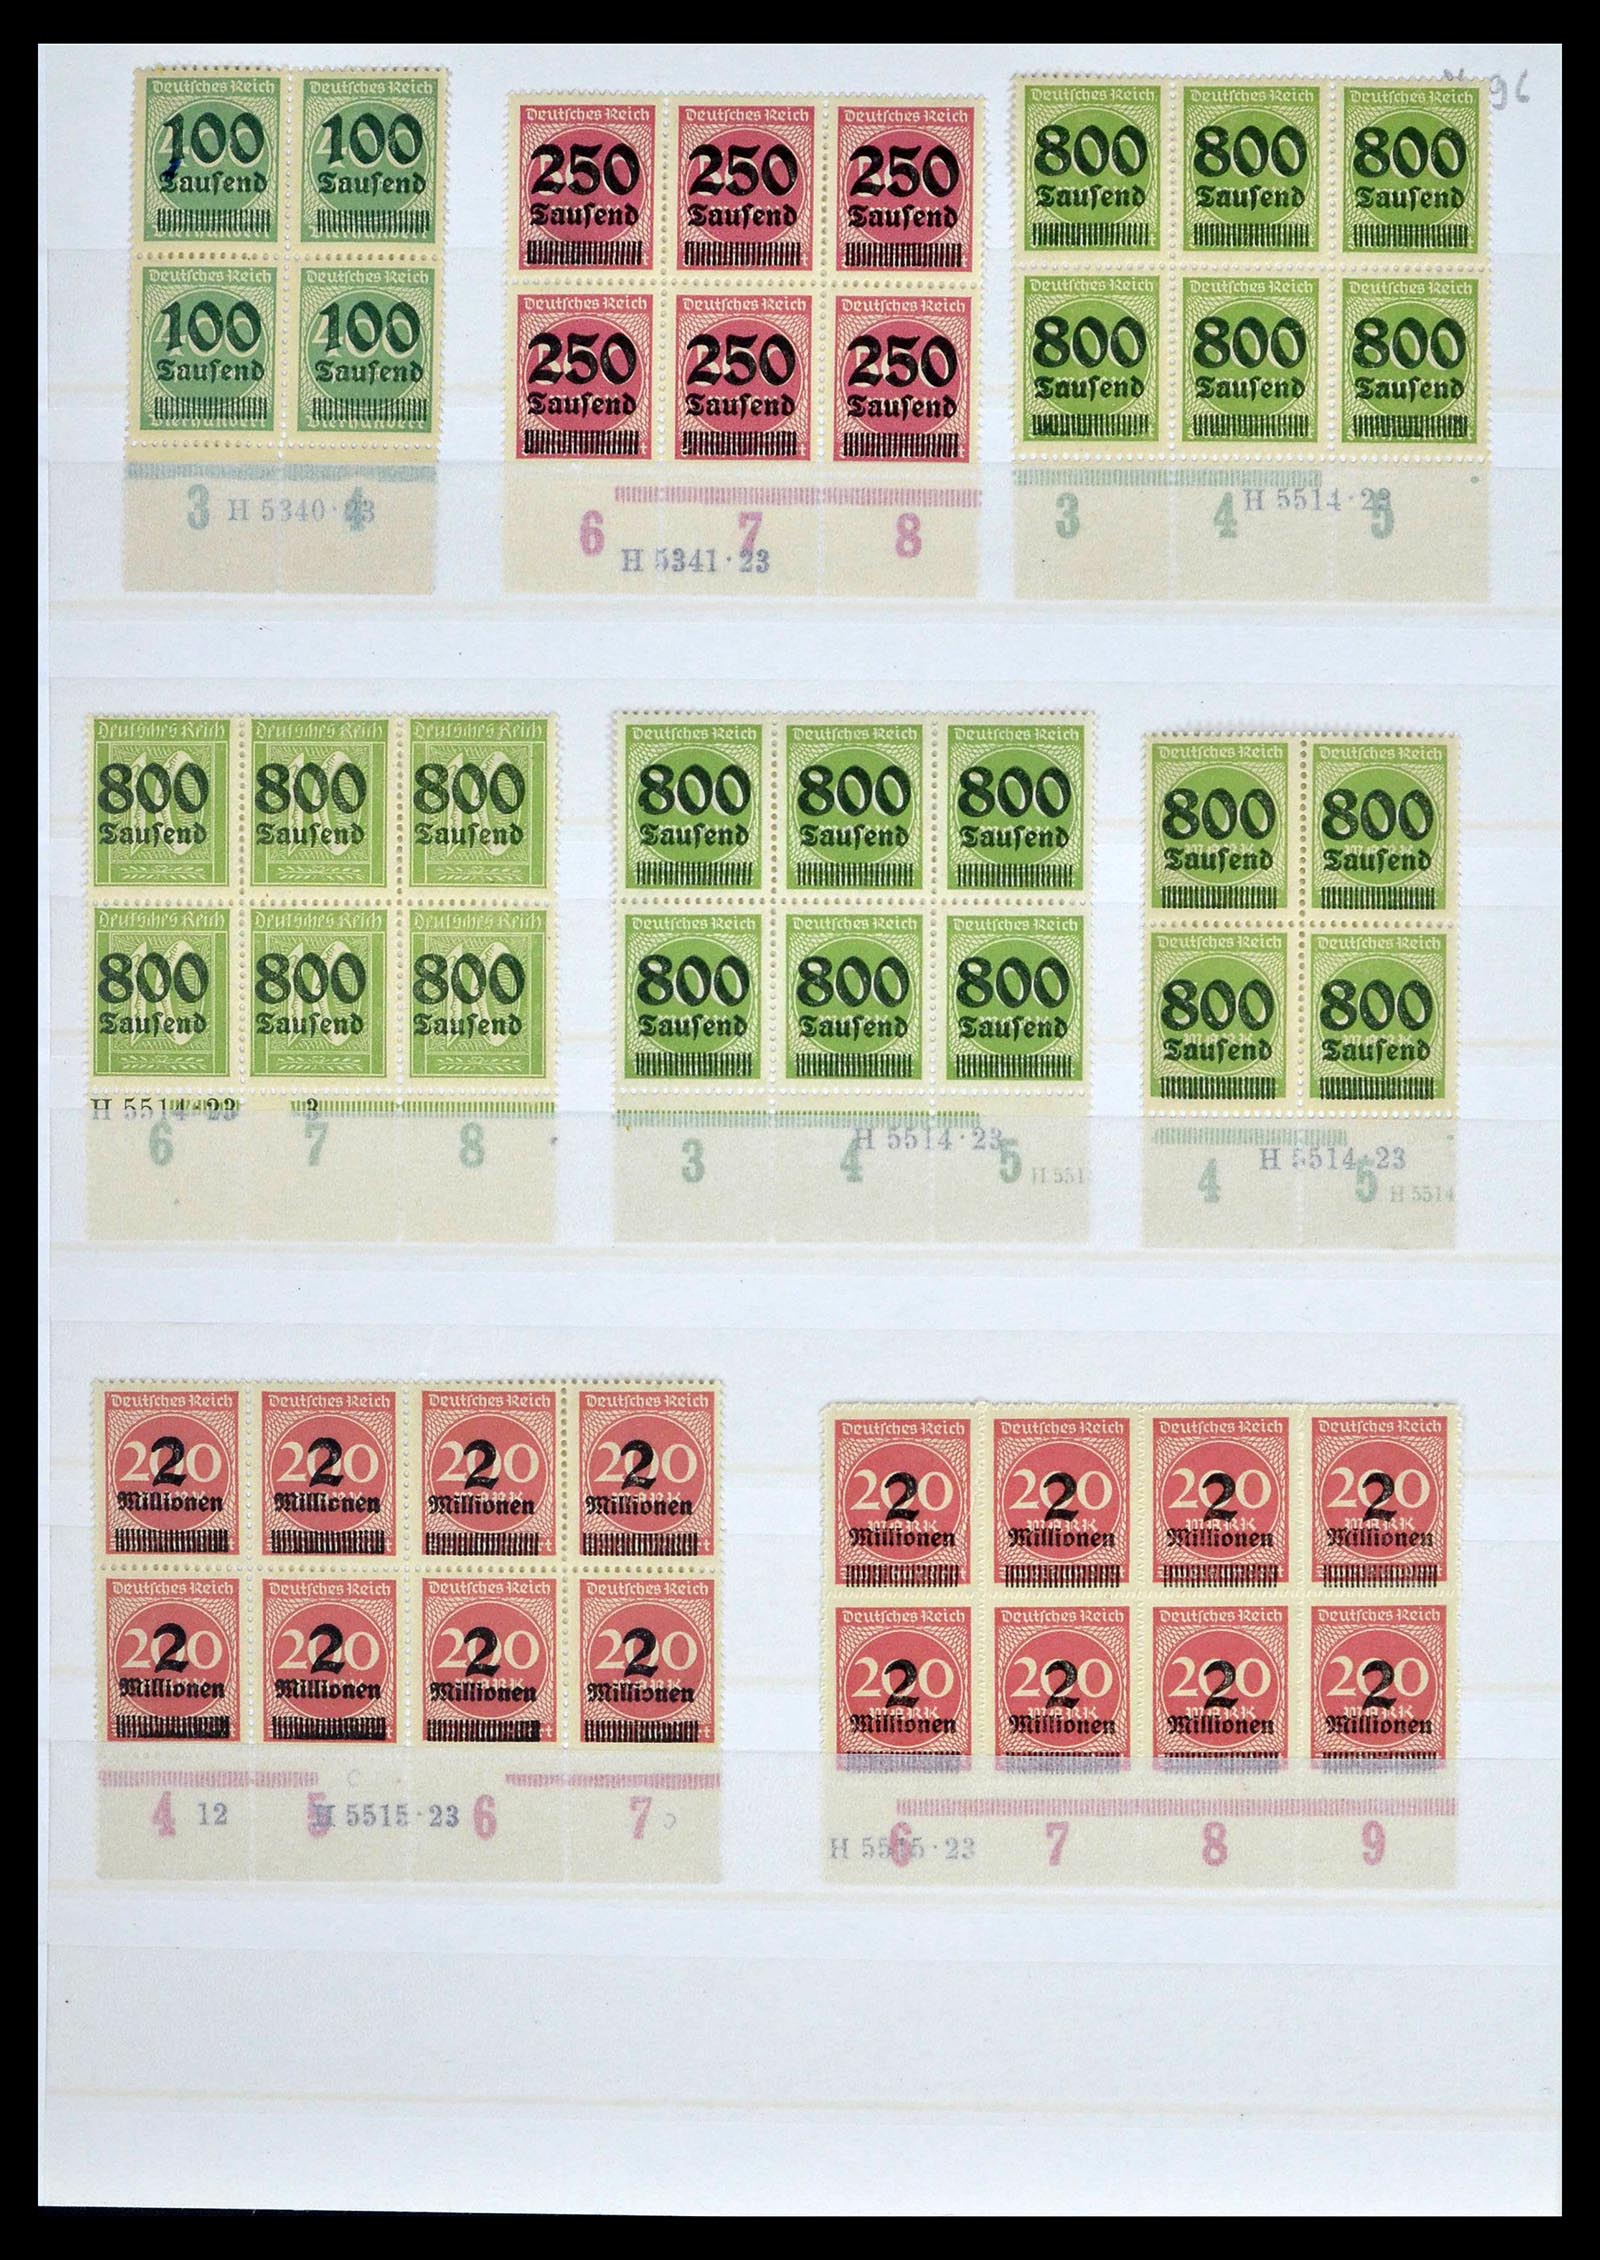 39254 0084 - Stamp collection 39254 German Reich MNH top margins.